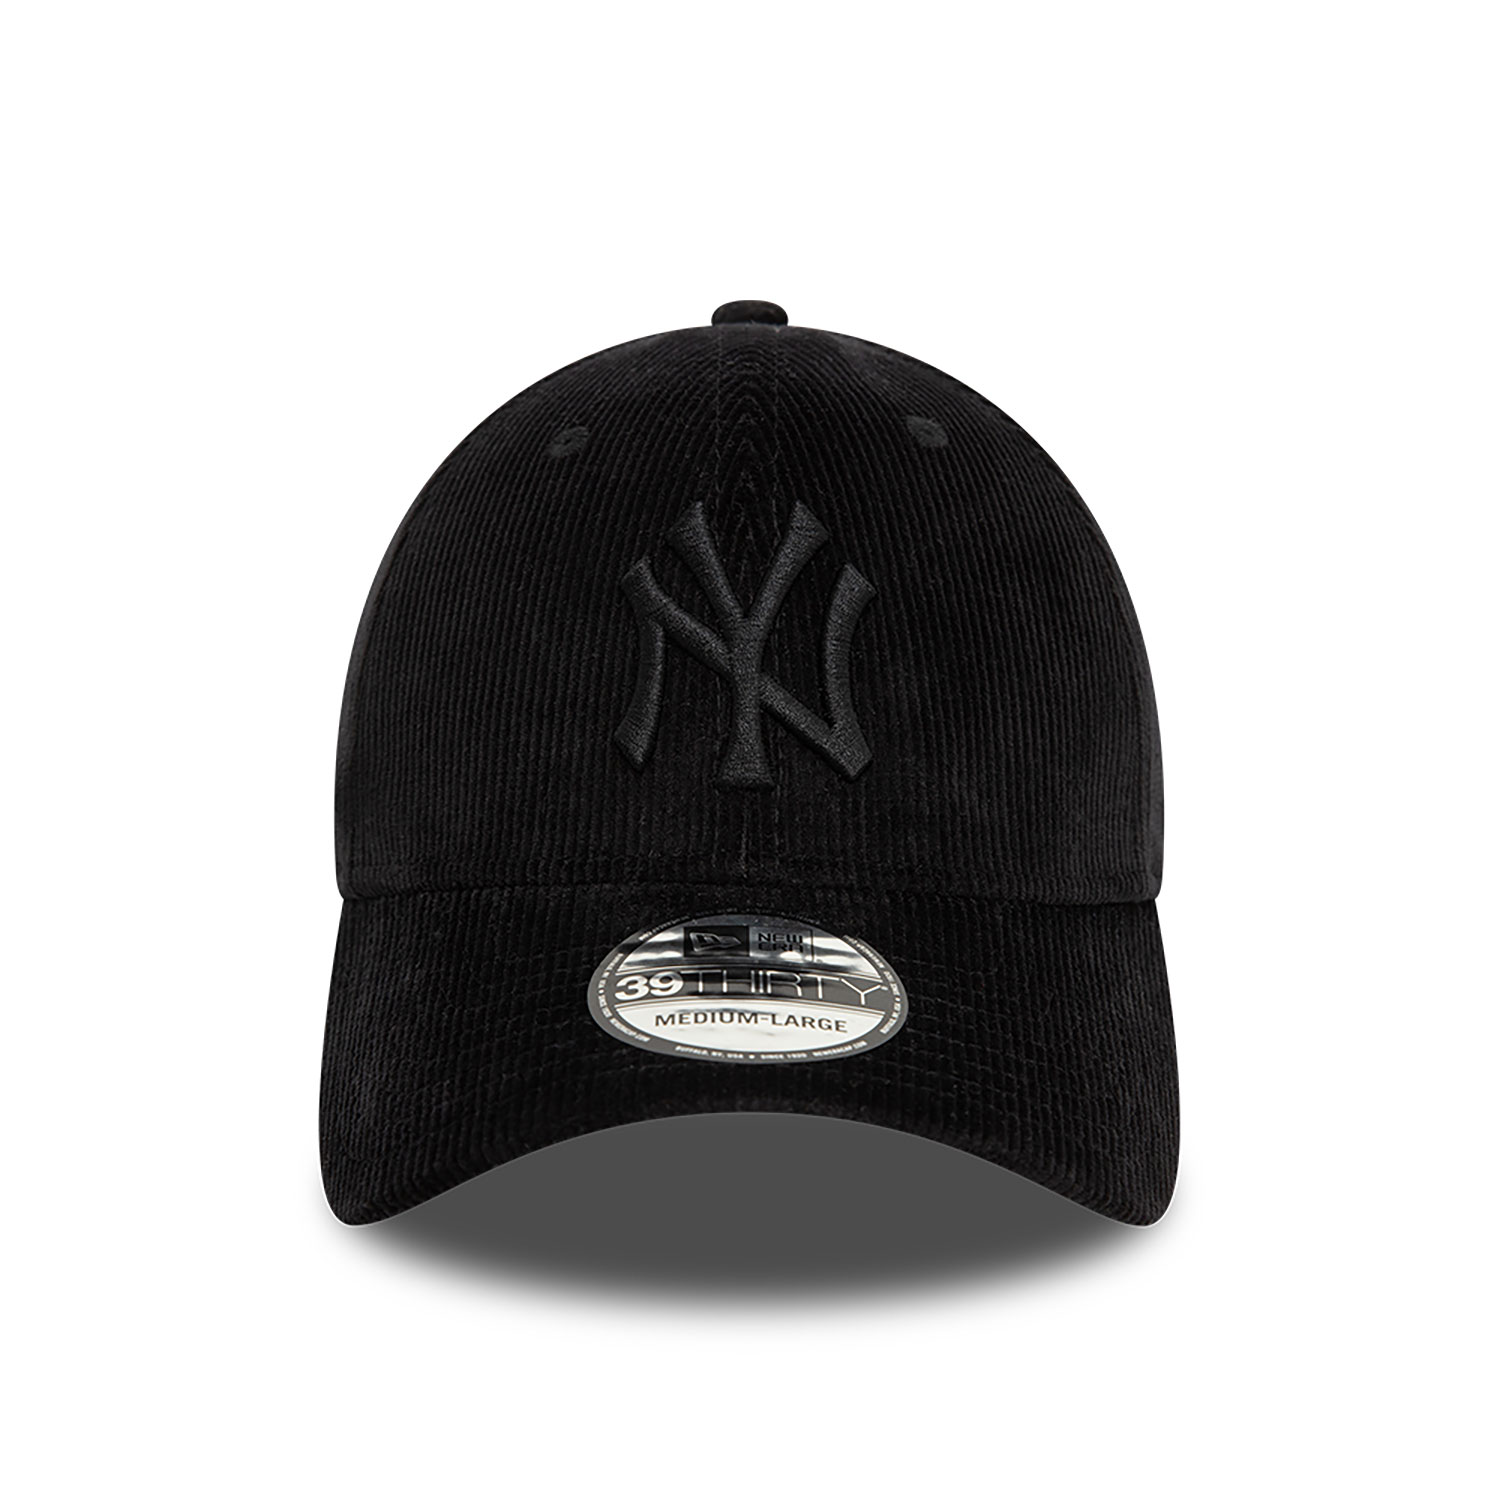 New York Yankees Cord Black 39THIRTY Stretch Fit Cap